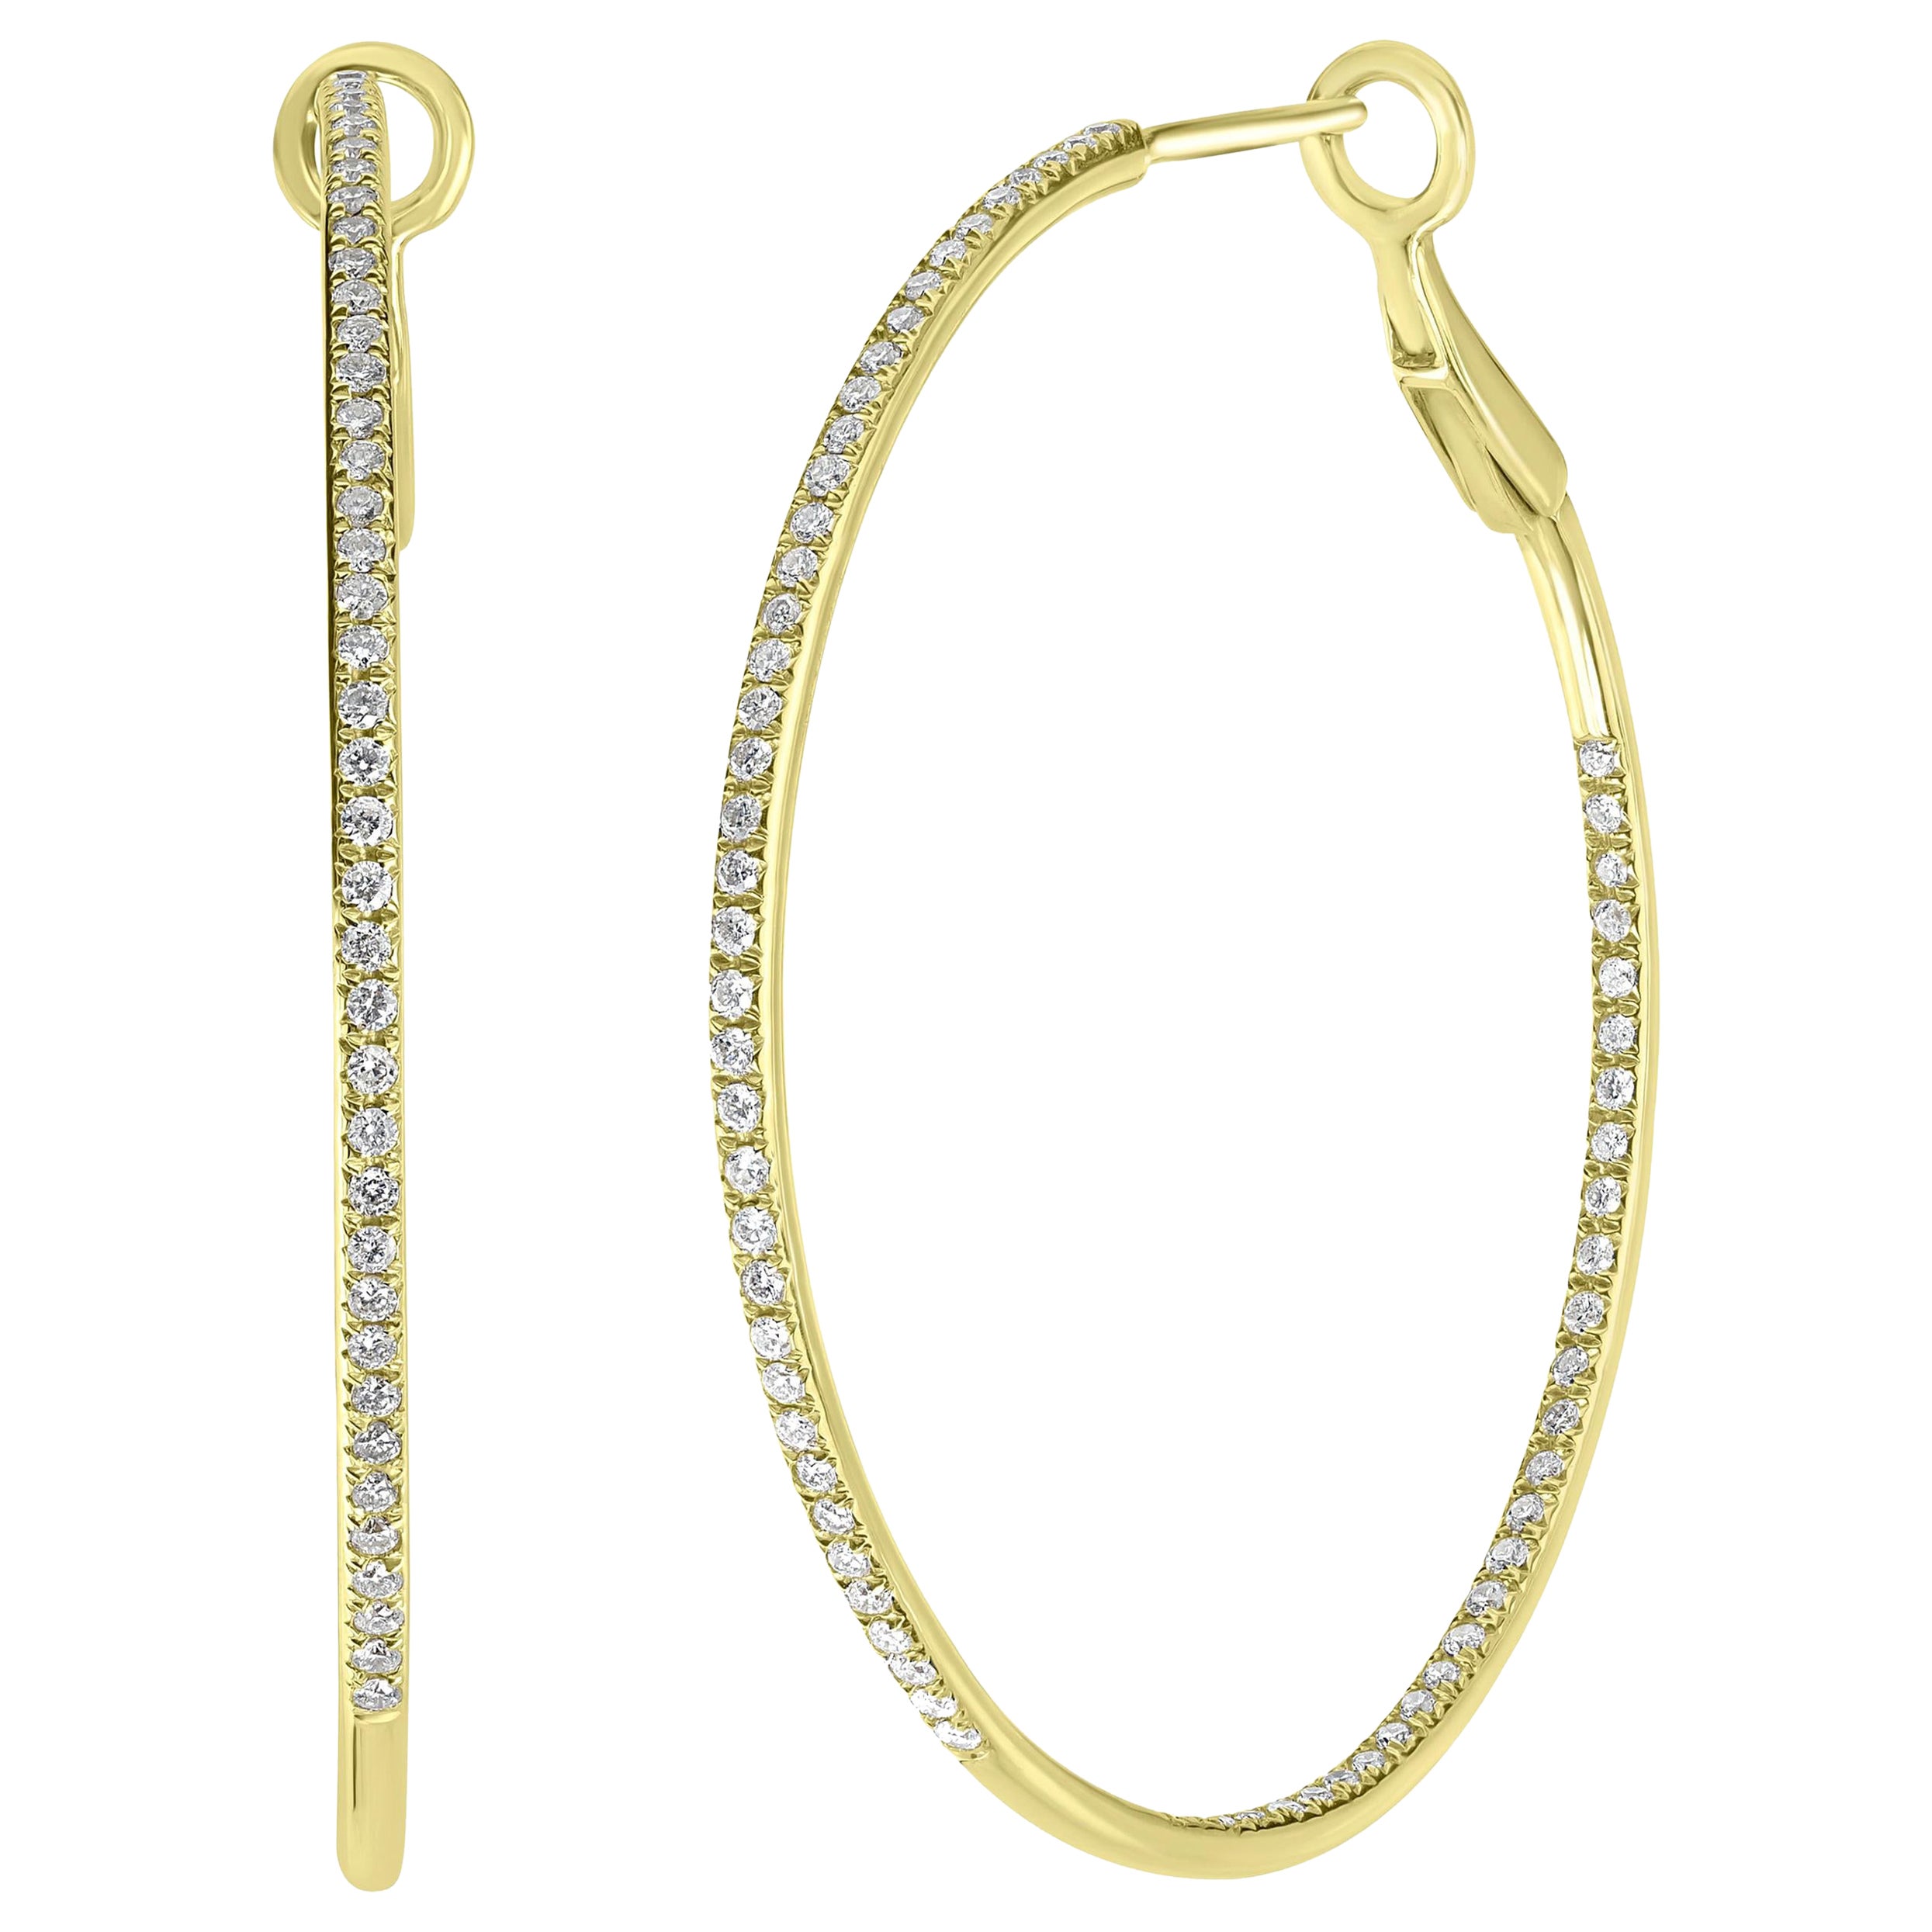 Luxle 0.73 Carat T.W Round Pave Diamond Hoop Earrings in 14k Yellow Gold